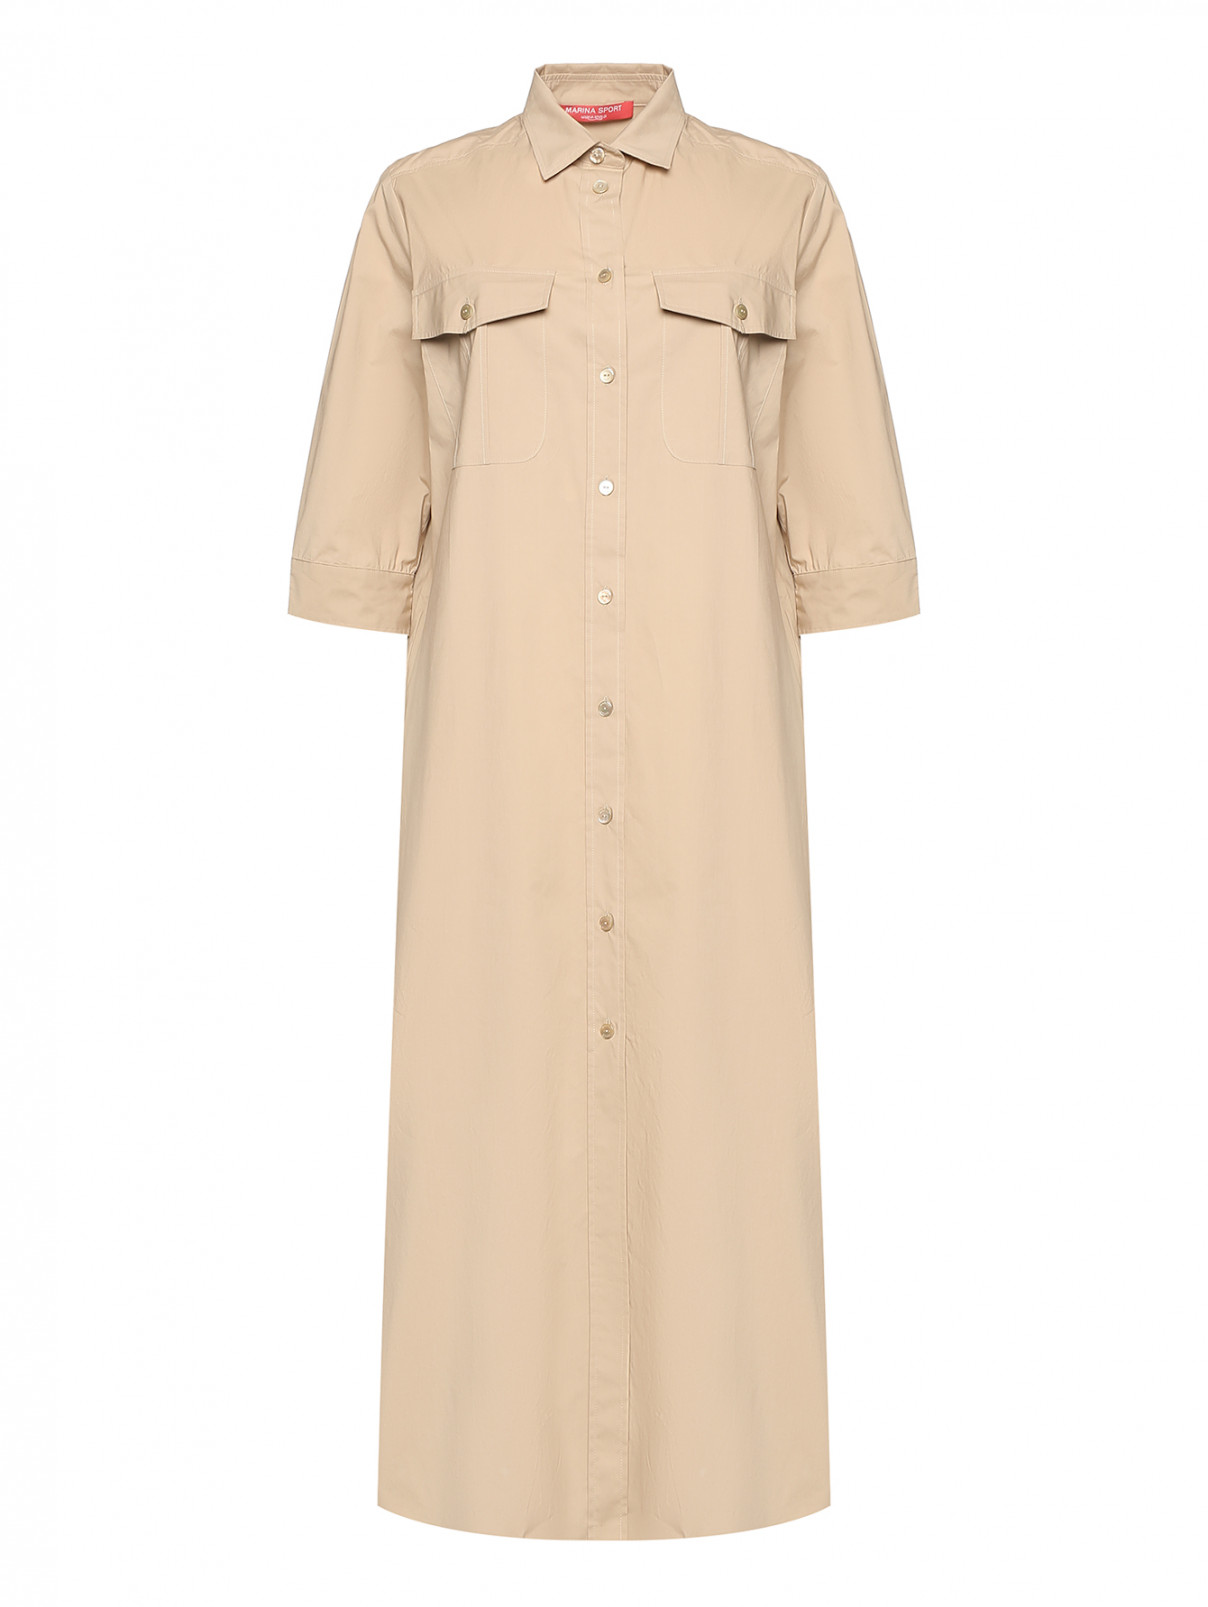 Платье-рубашка из хлопка Marina Rinaldi  –  Общий вид  – Цвет:  Бежевый